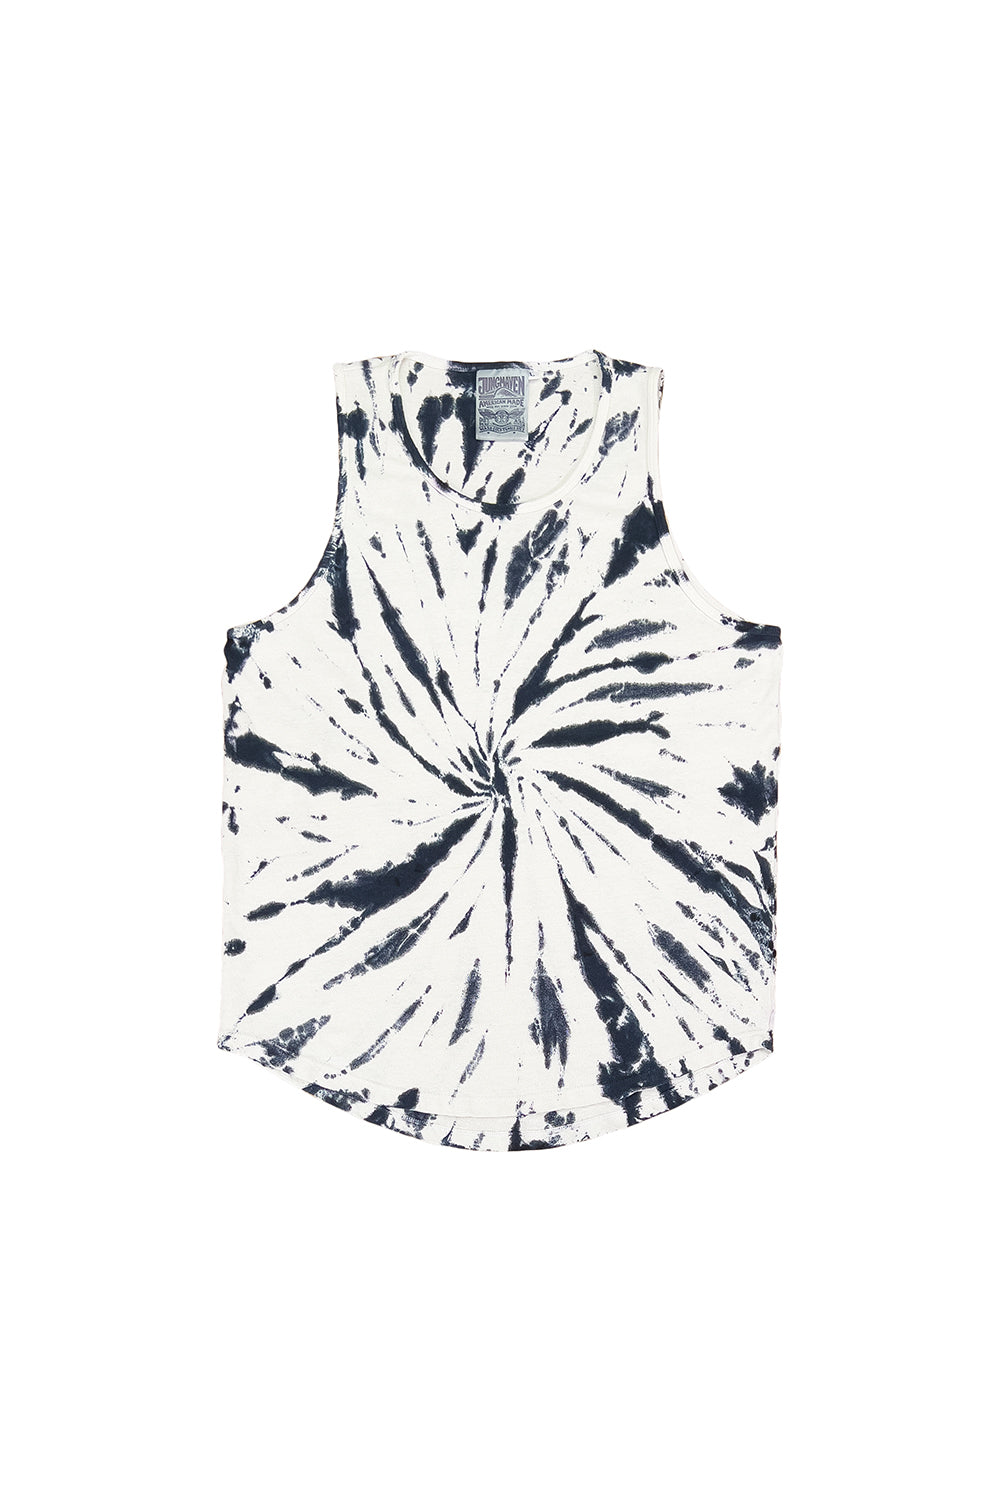 Swirl Tank Top | Jungmaven Hemp Clothing & Accessories